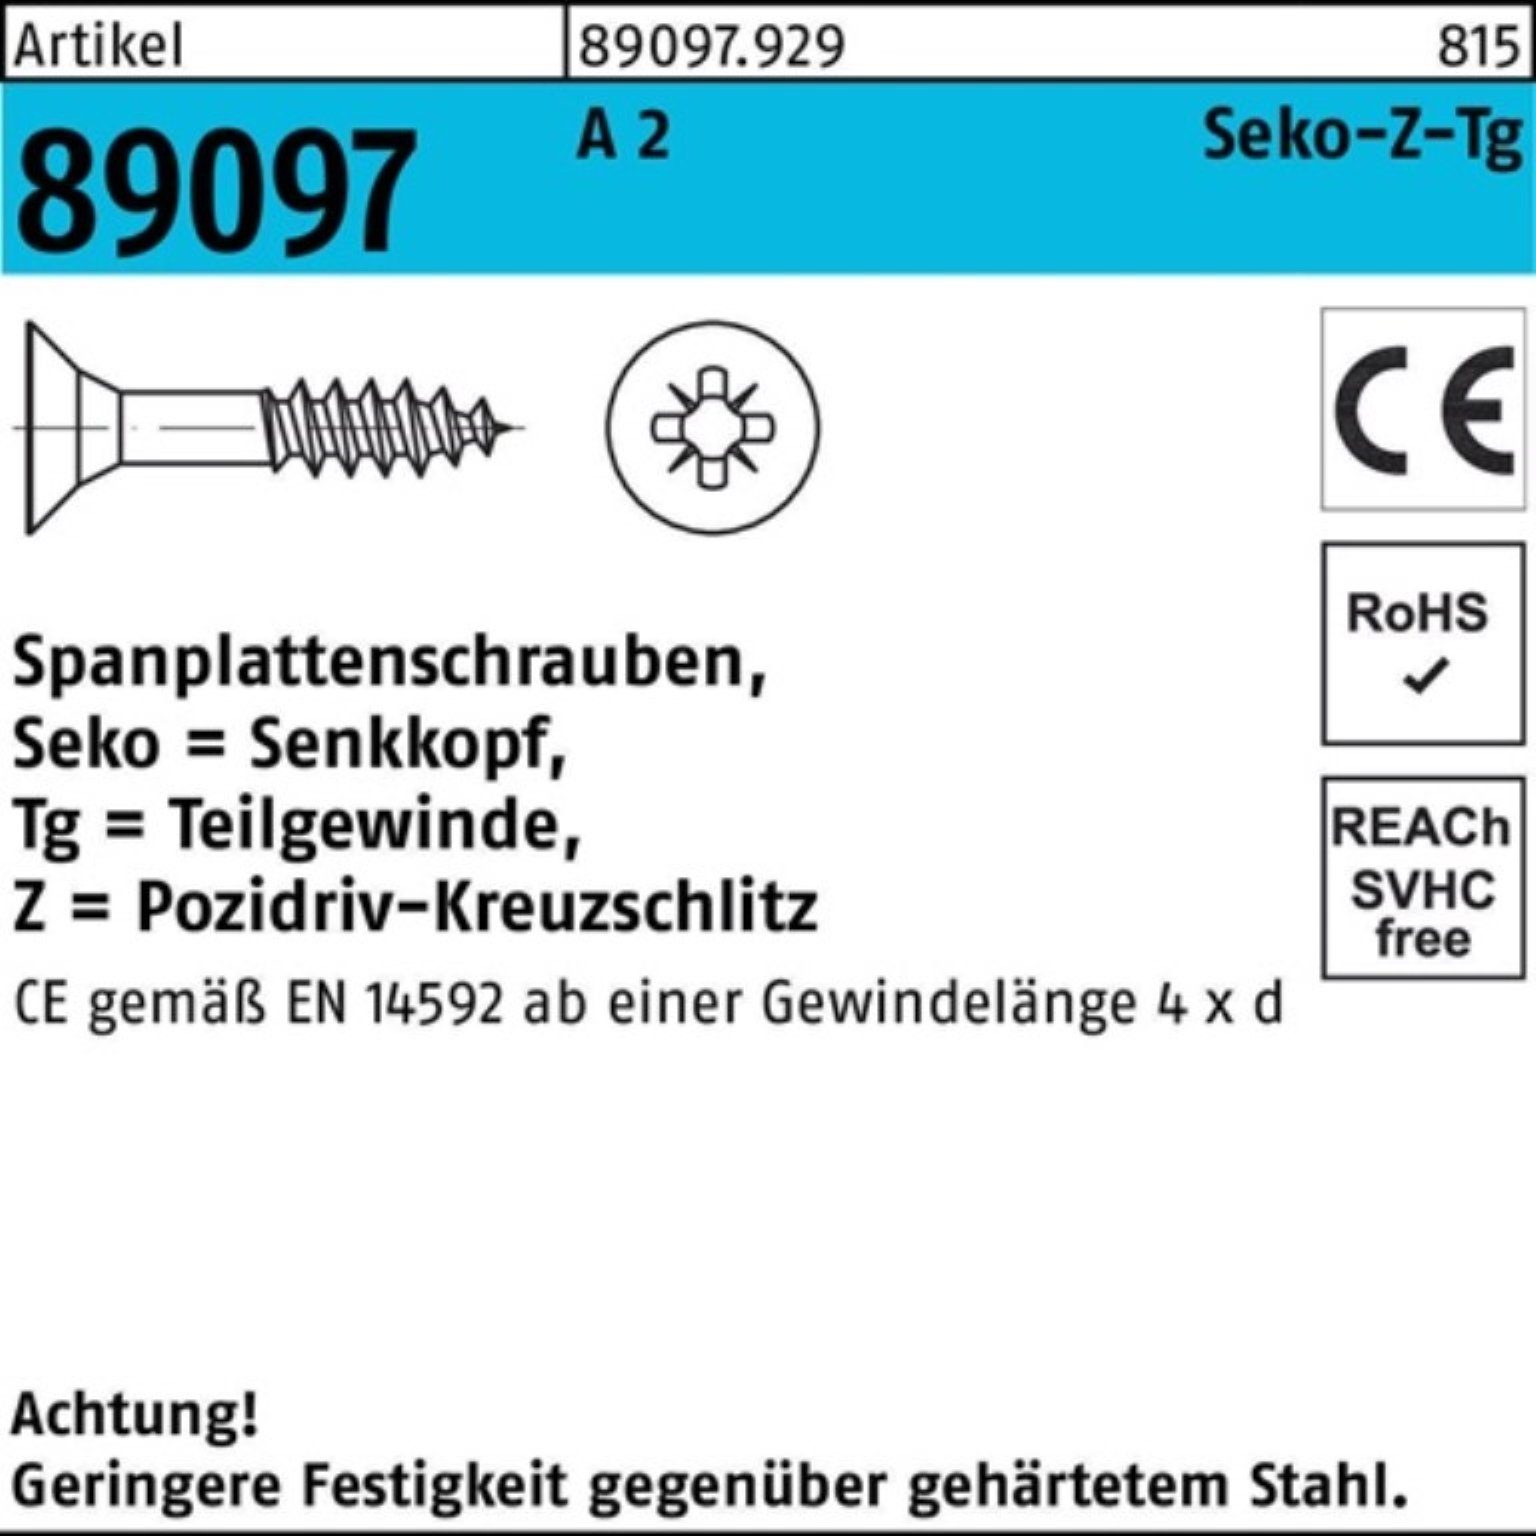 PZ SEKO 89097 Reyher TG Pack Spanplattenschraube 70-Z 2 Spanplattenschraube 100 4x R 100er A Stü